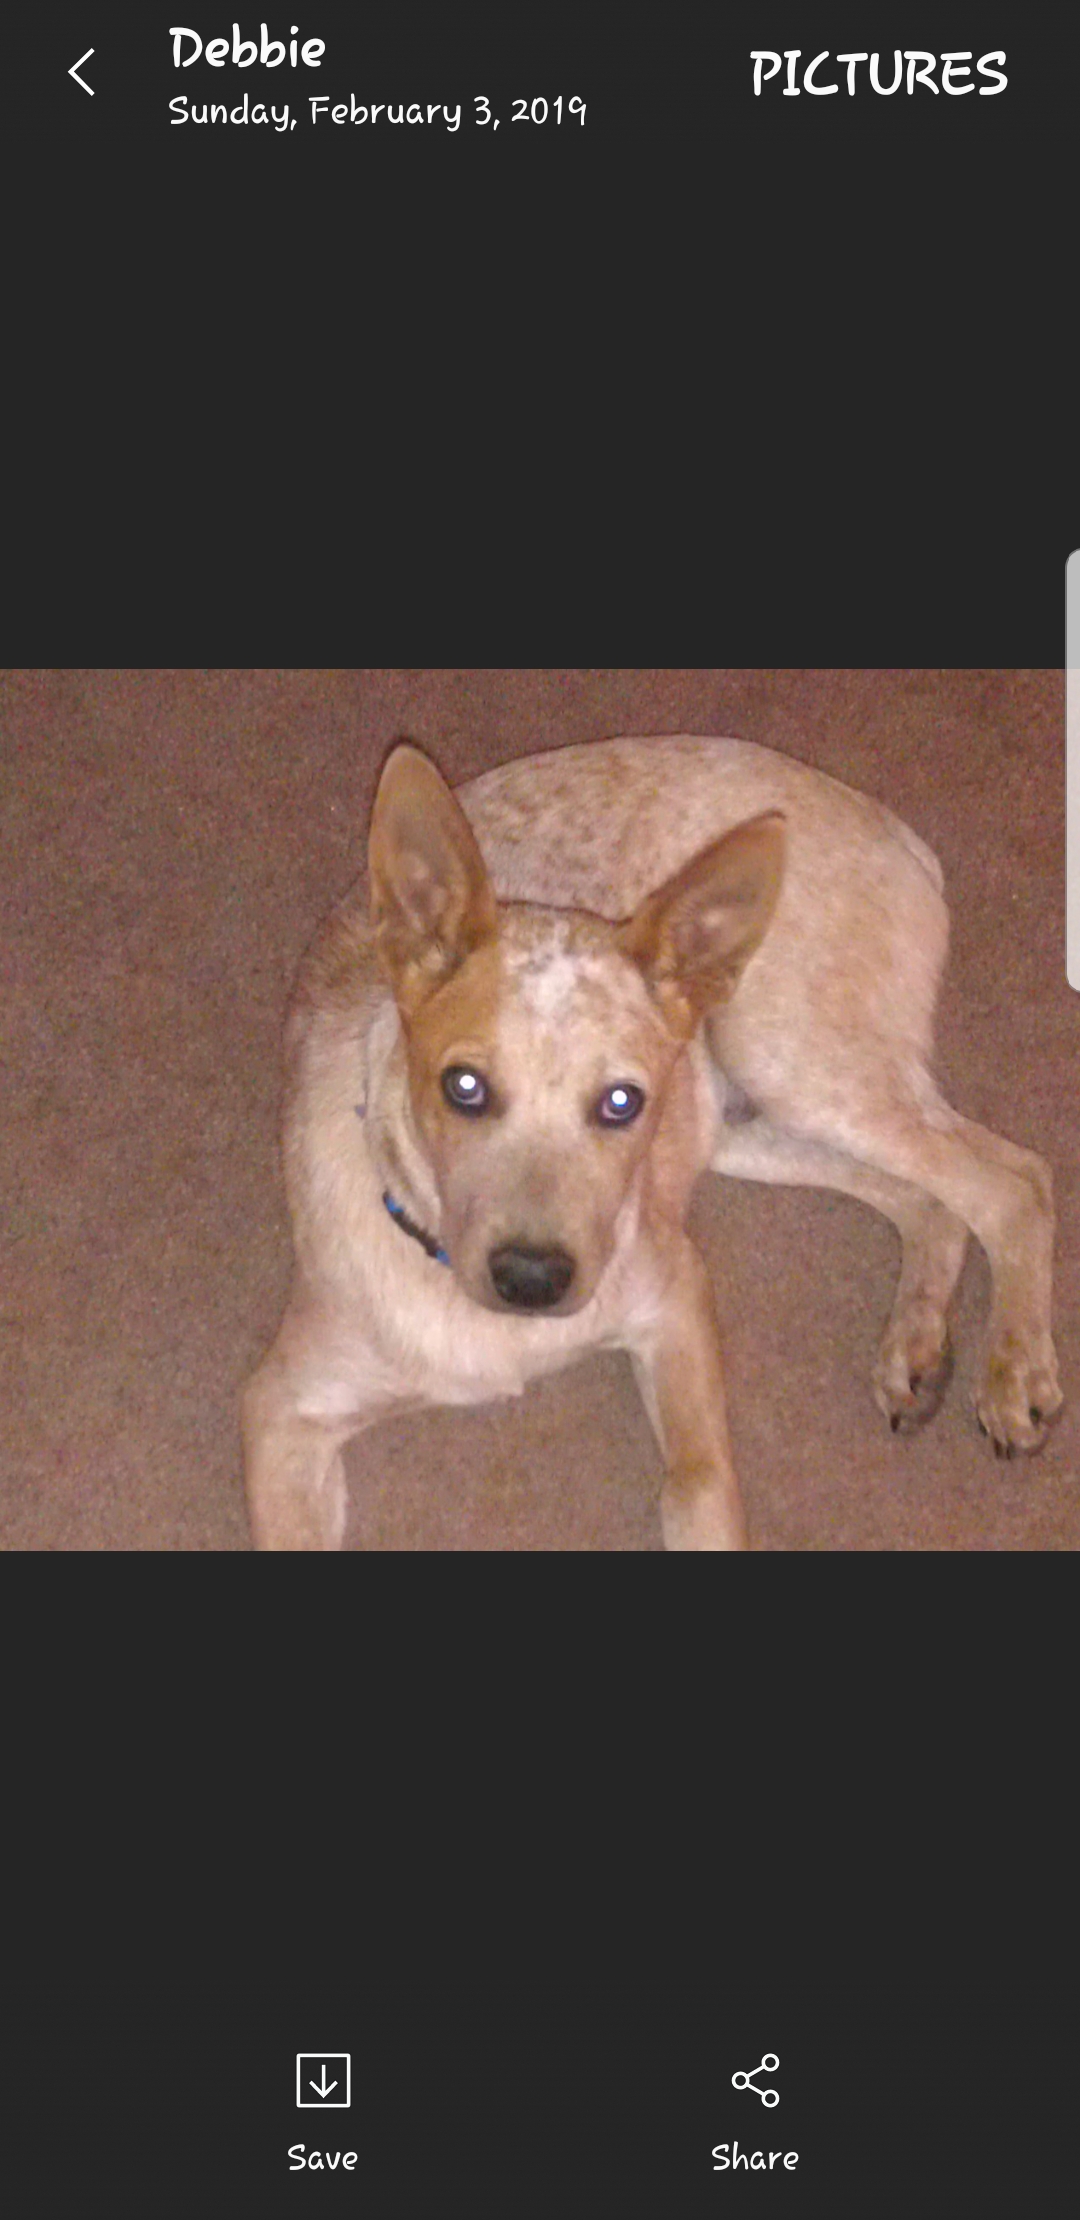 Image of Sam, Lost Dog